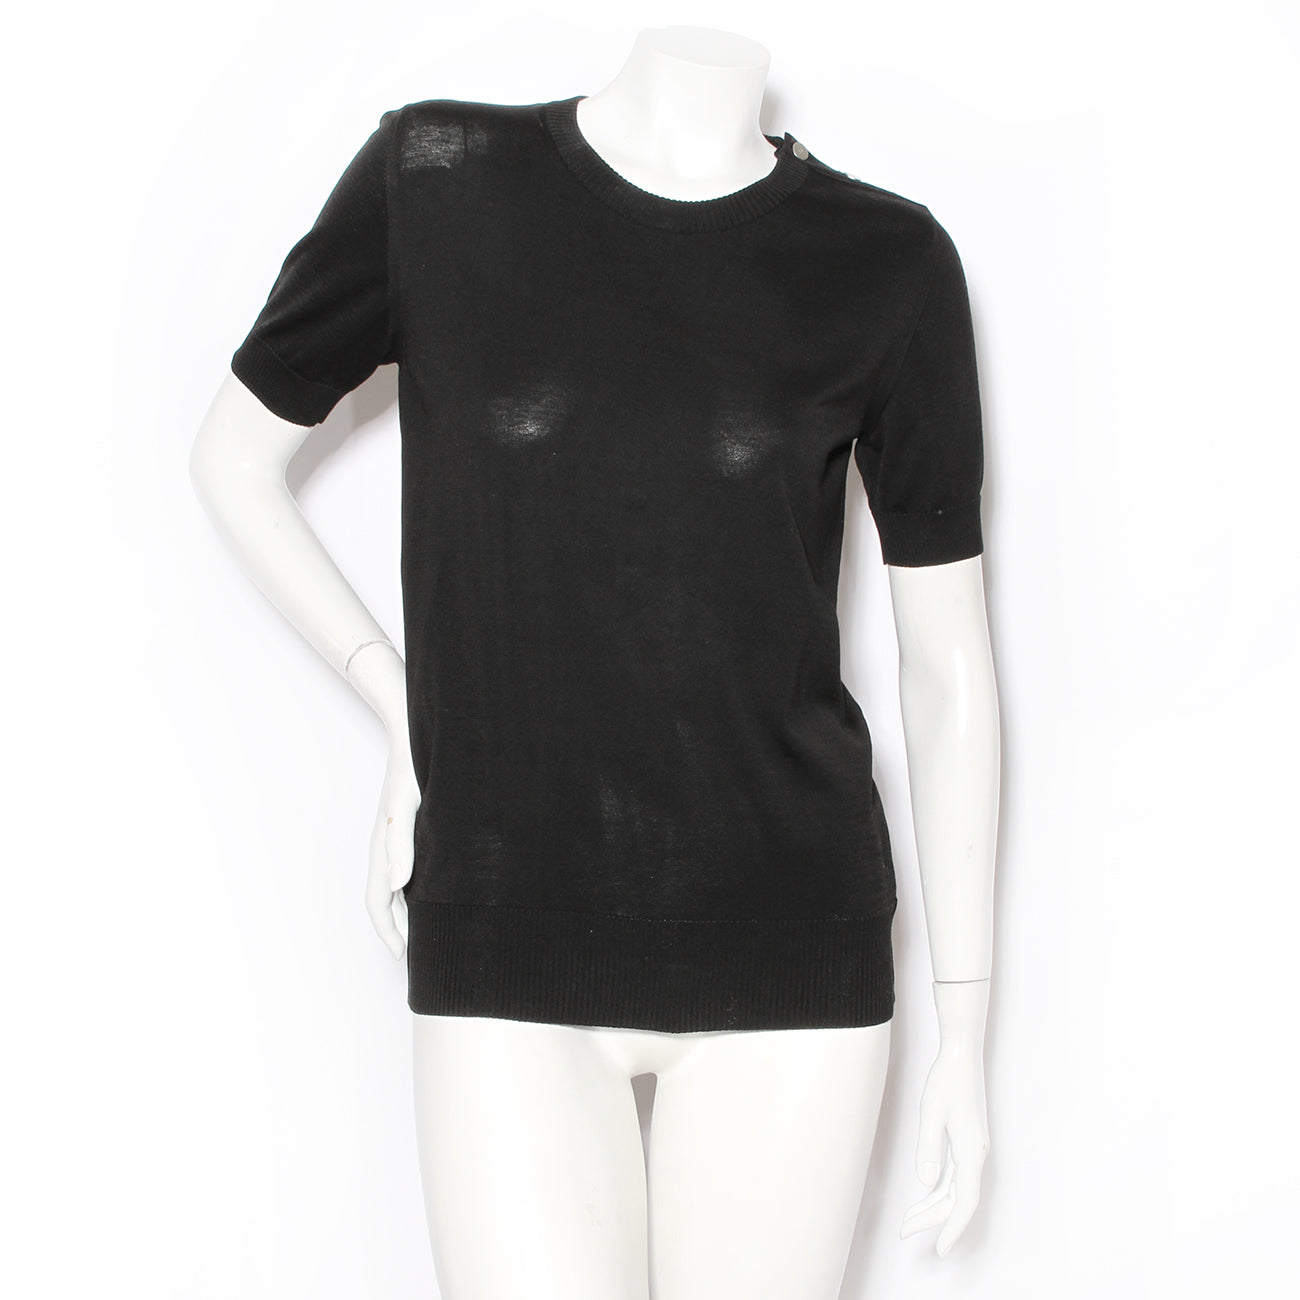 CHANEL Cotton Sequin CC Logo Shirt White Black